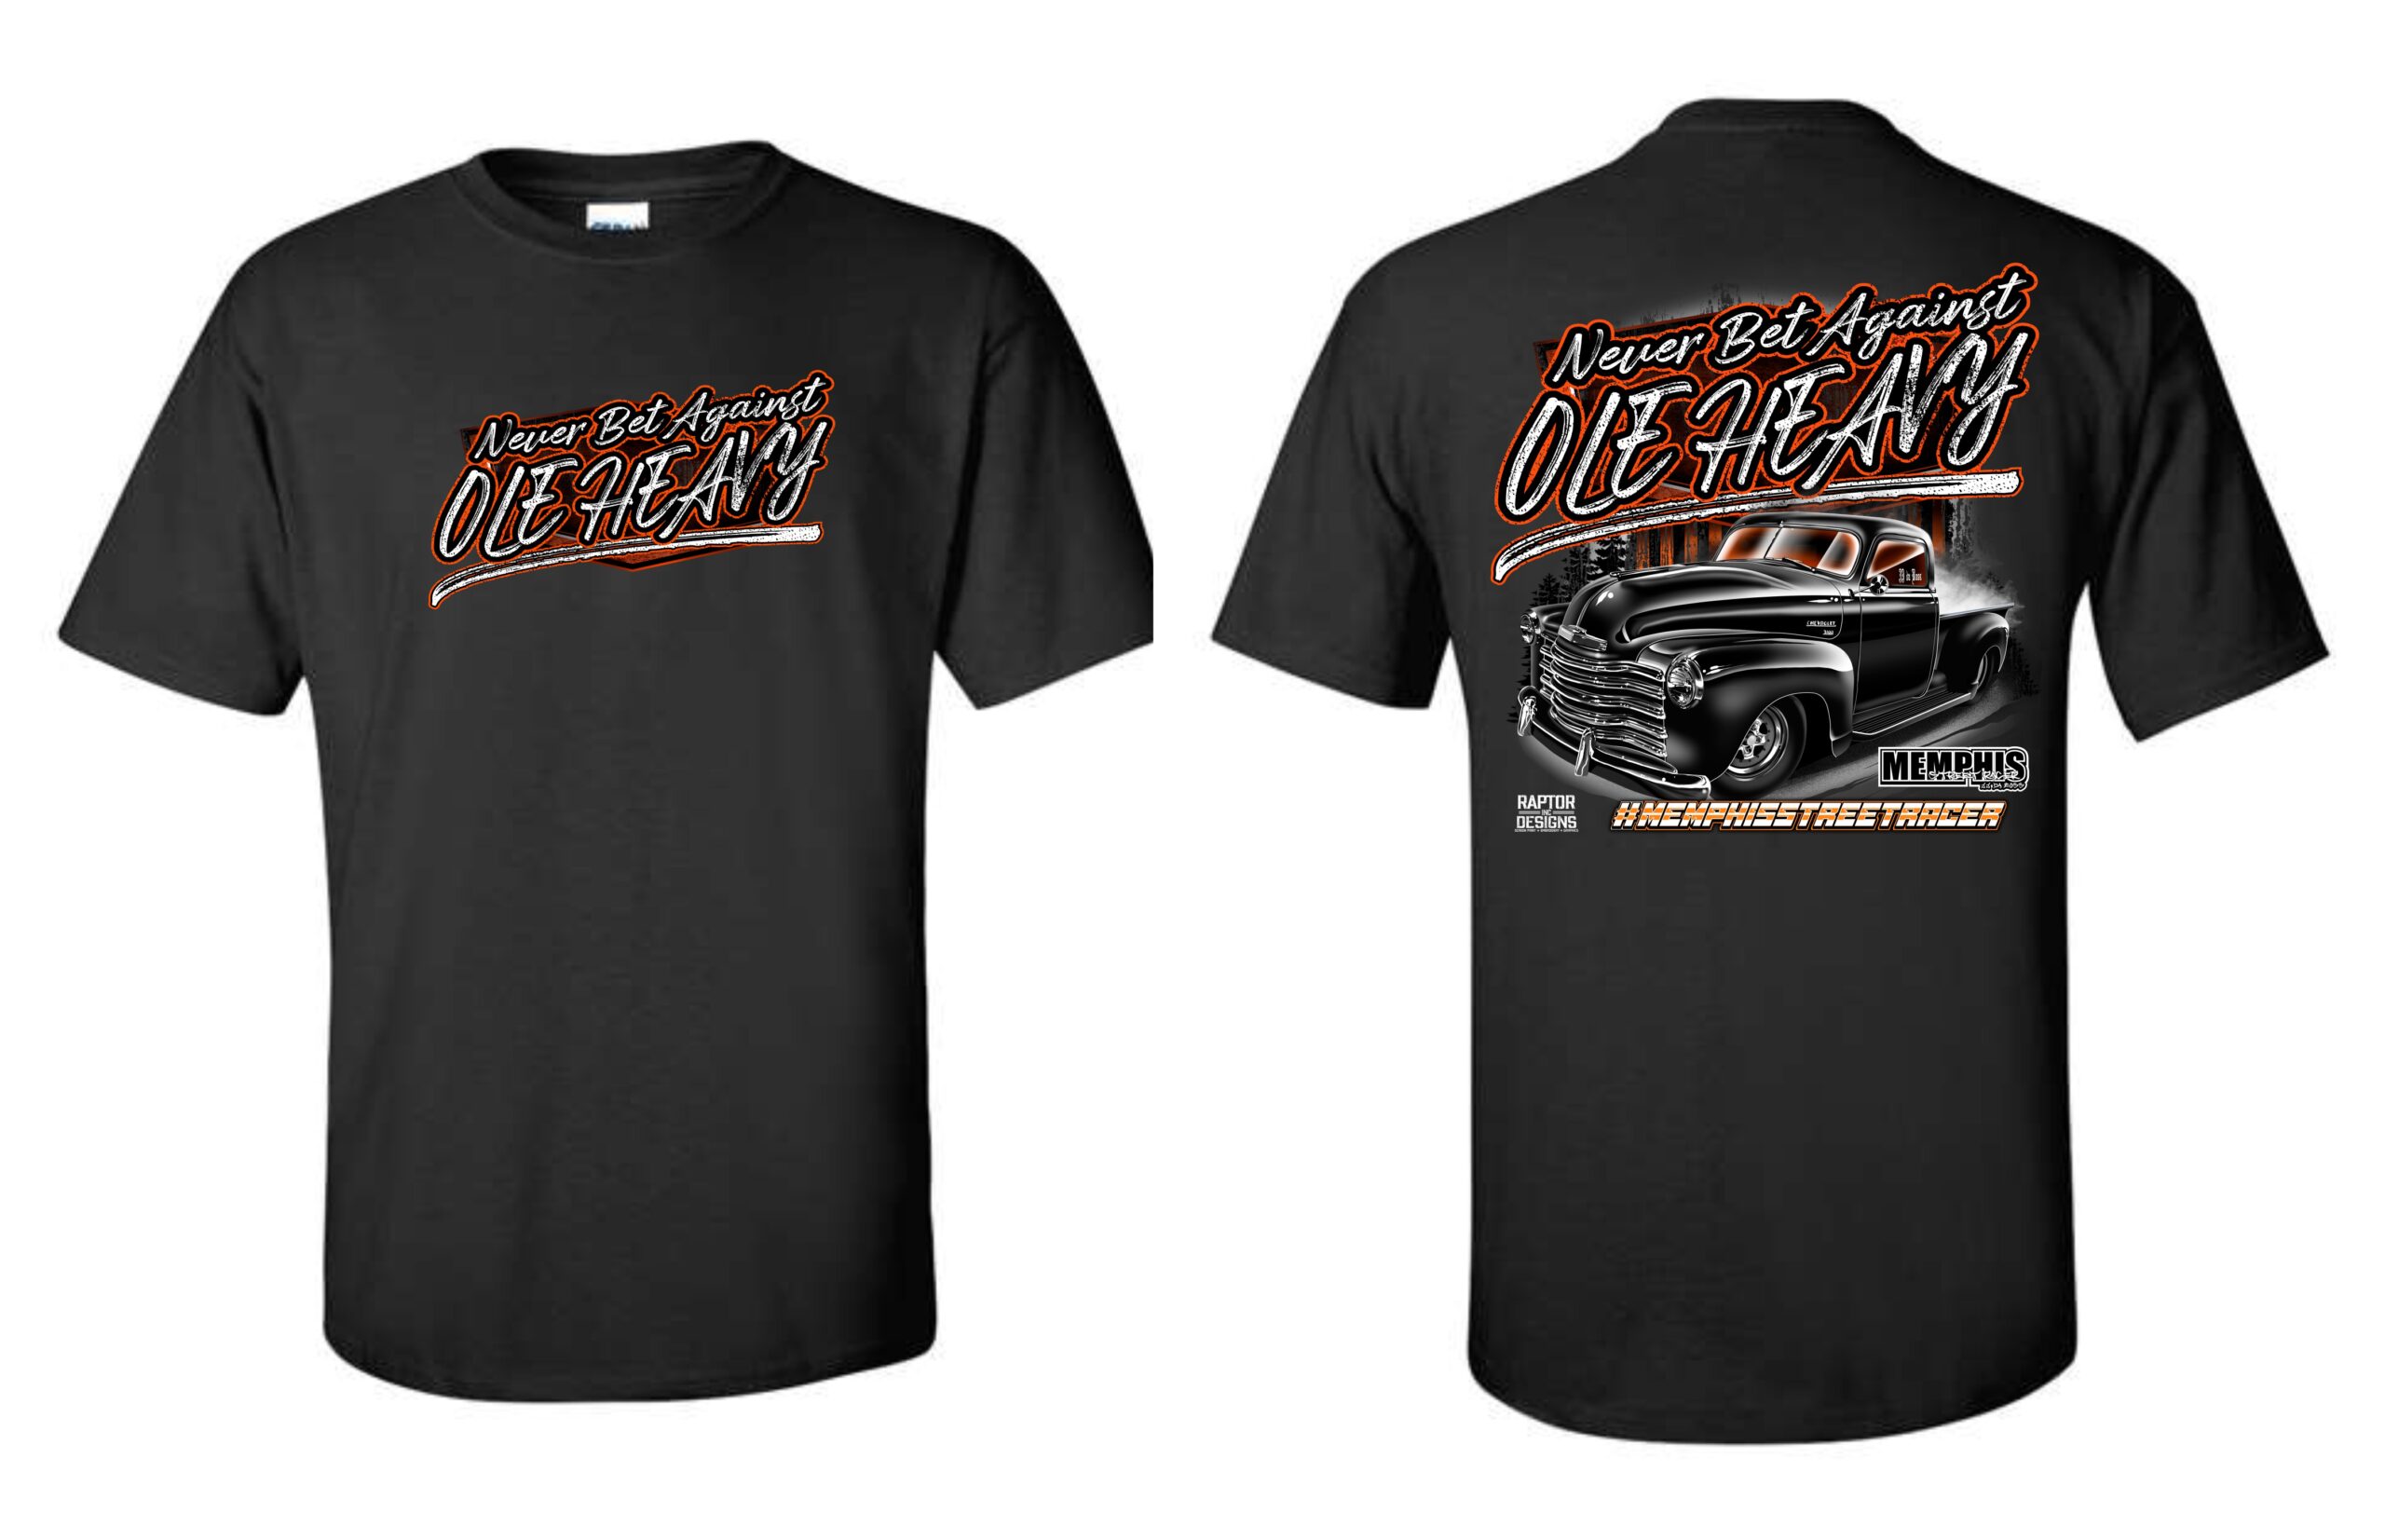 Ole Heavy - Don't Bet Against Ole Heavy - Memphis Street Racer